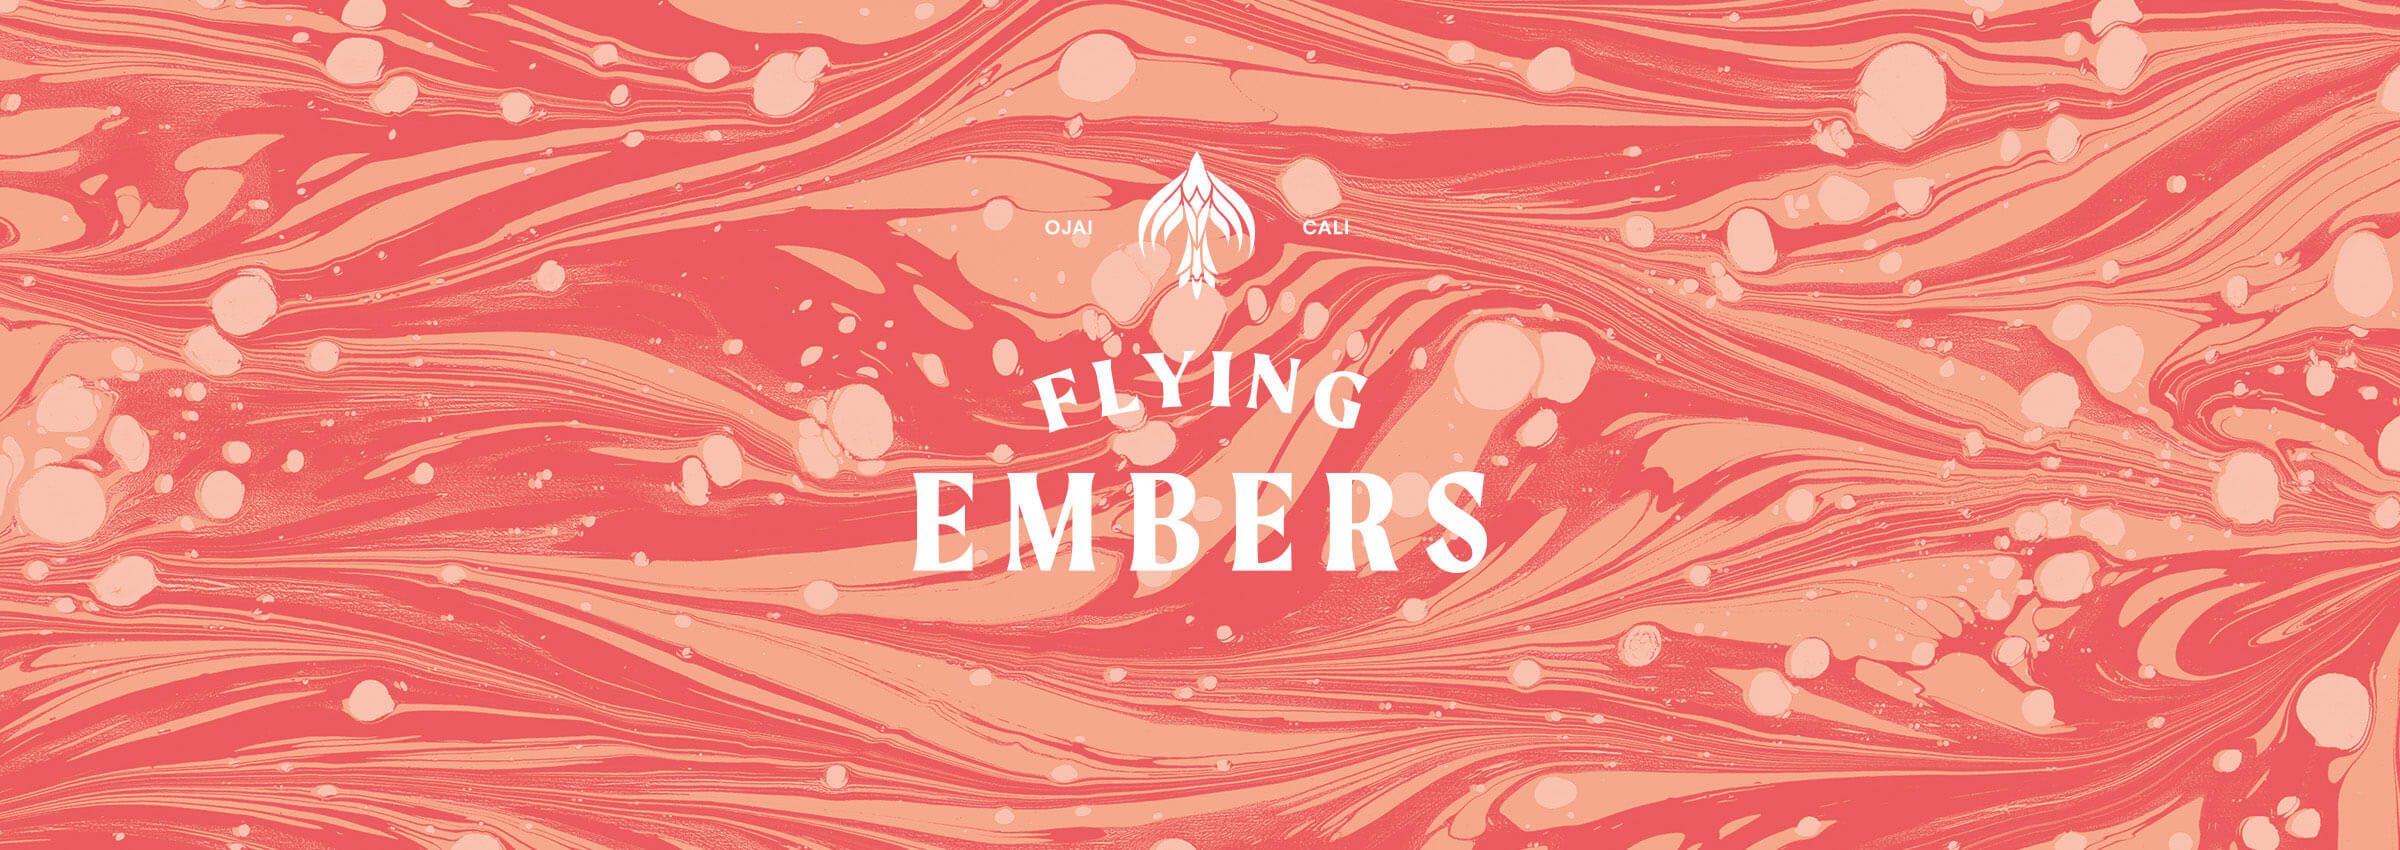 flying-embers-work-highlight